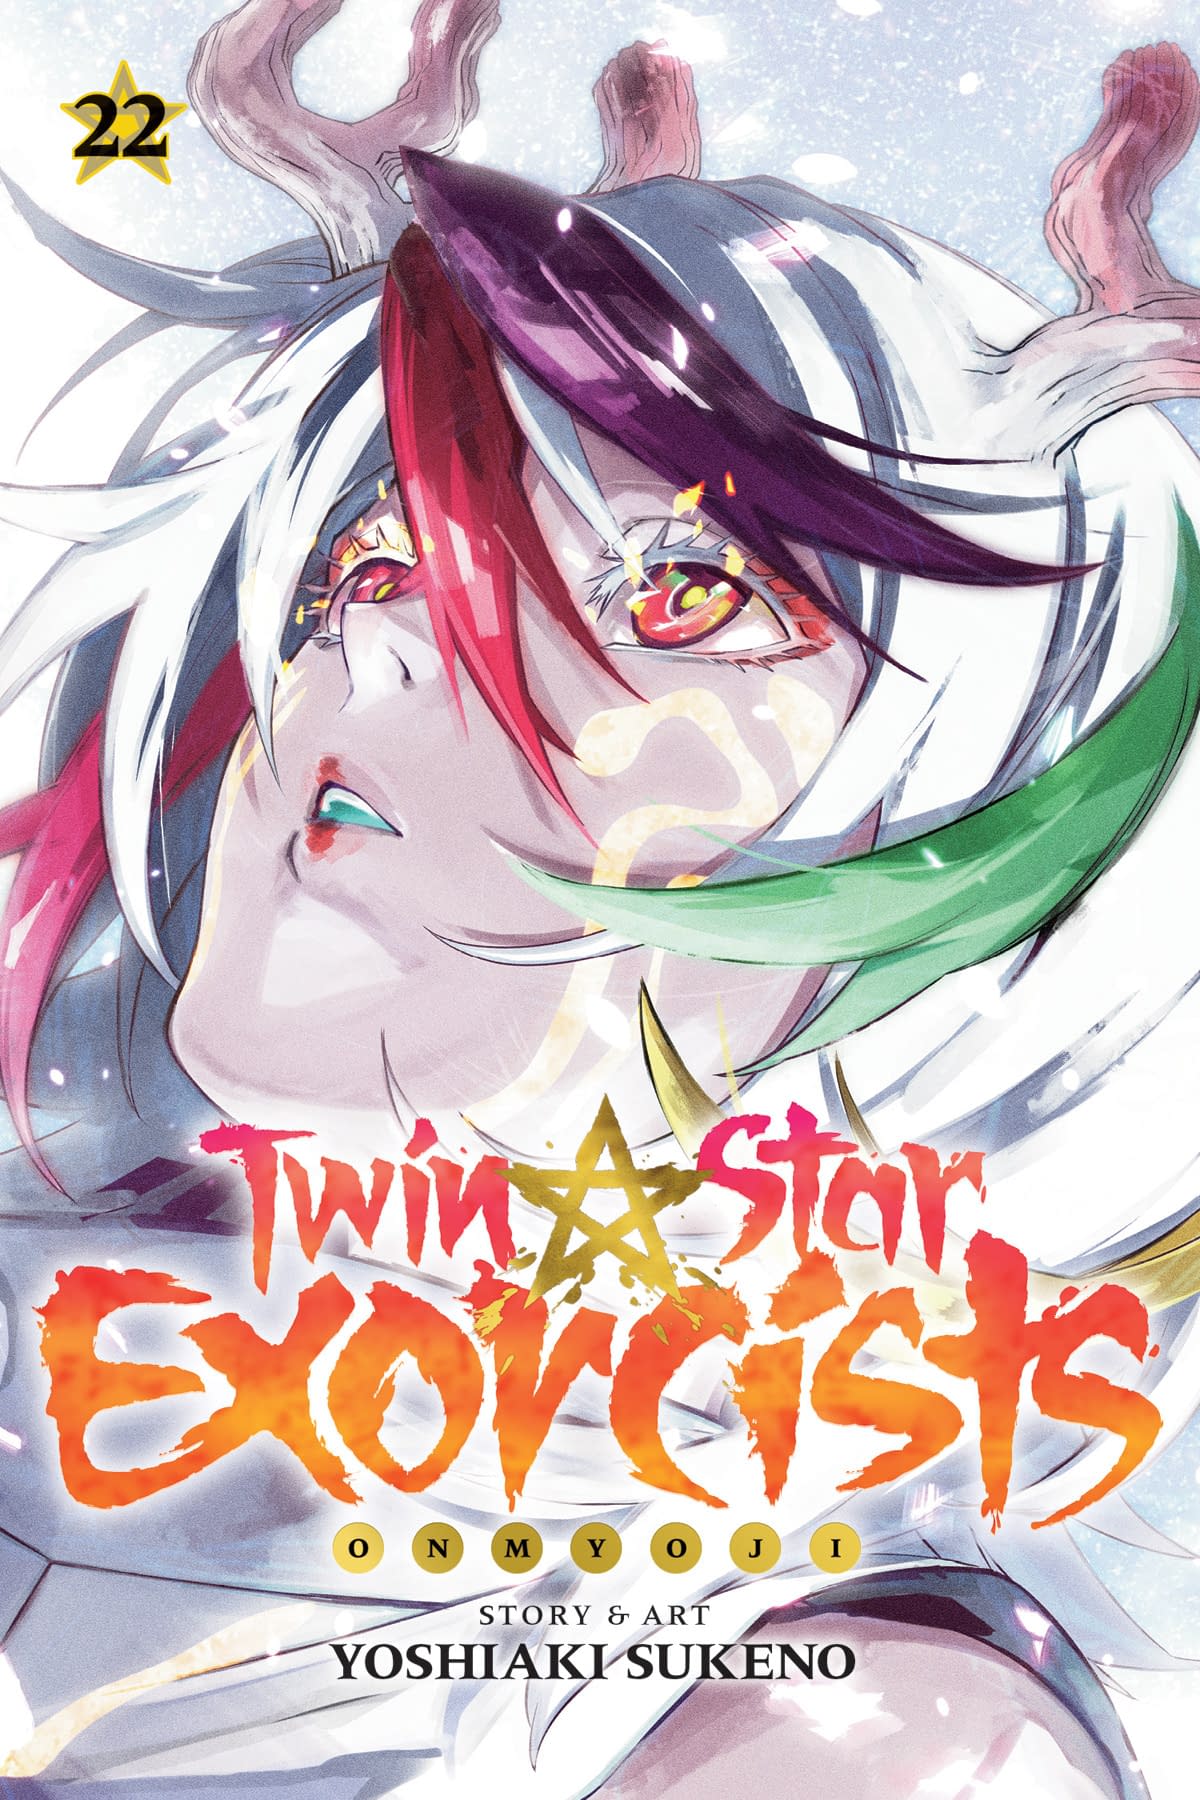 Demon soul girl  Twin star exorcist, Manga pages, Manga girl